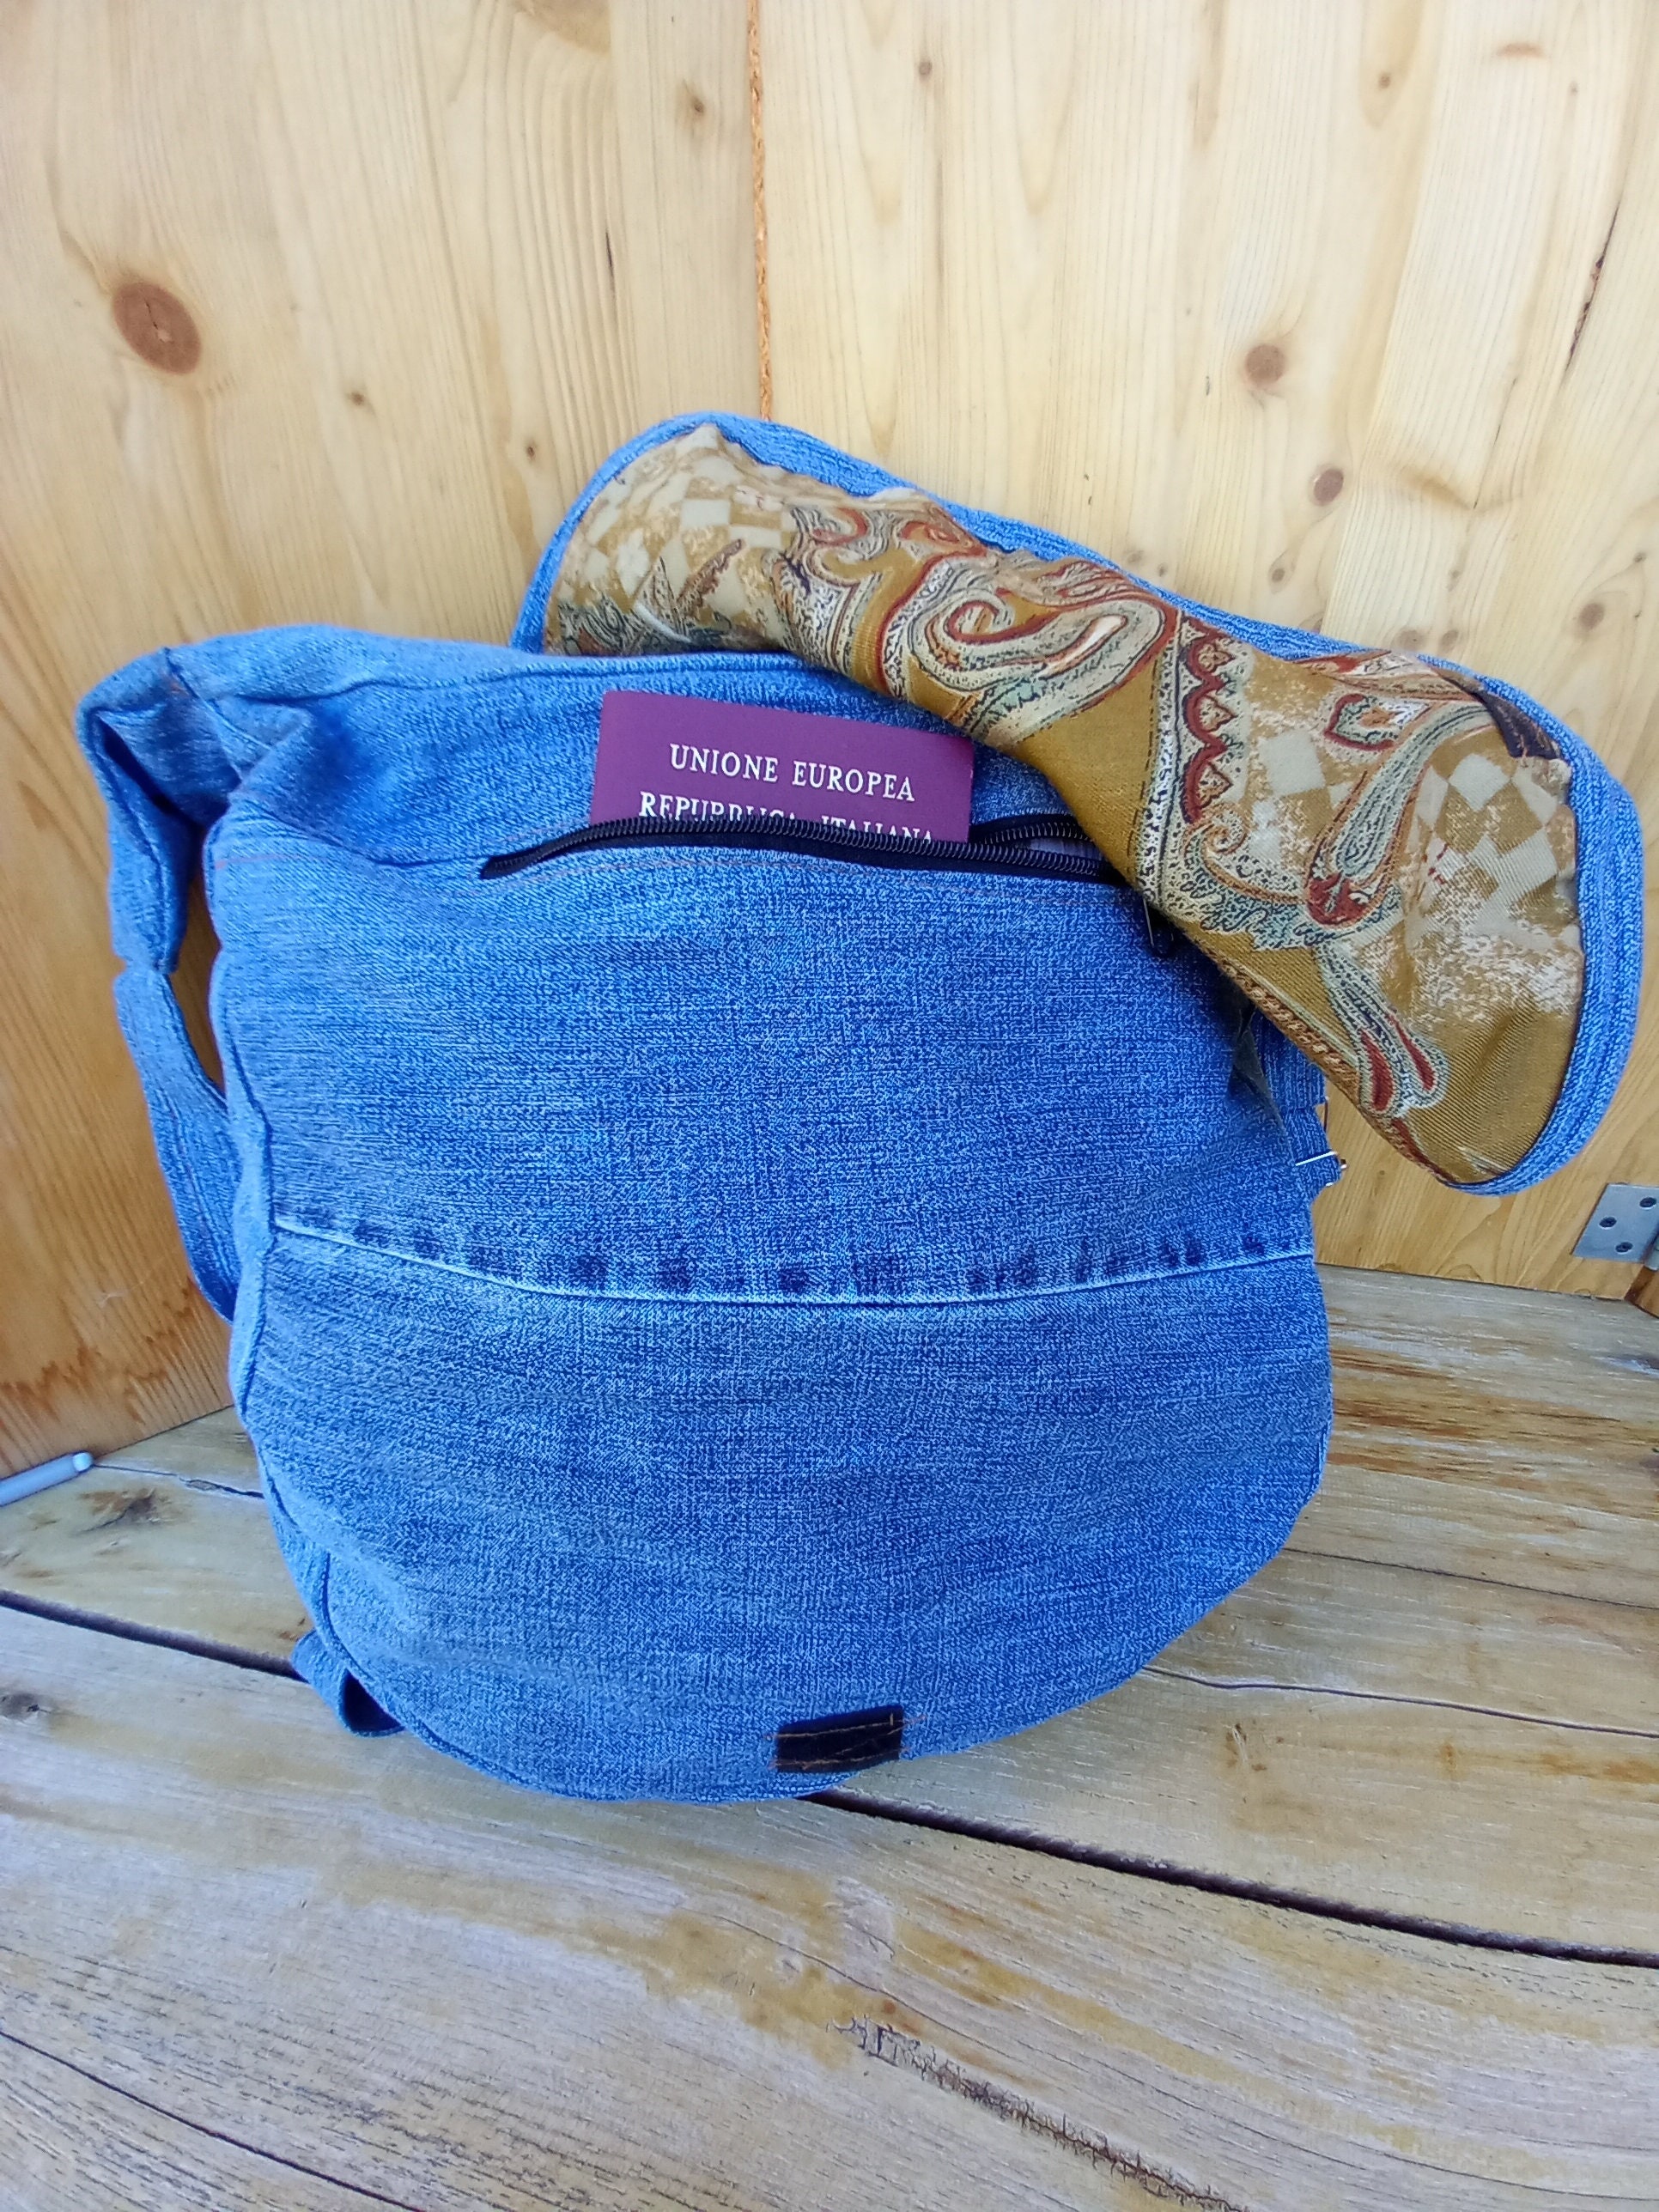 The Capri Diaper Bag Backpack – Elkie & Co.